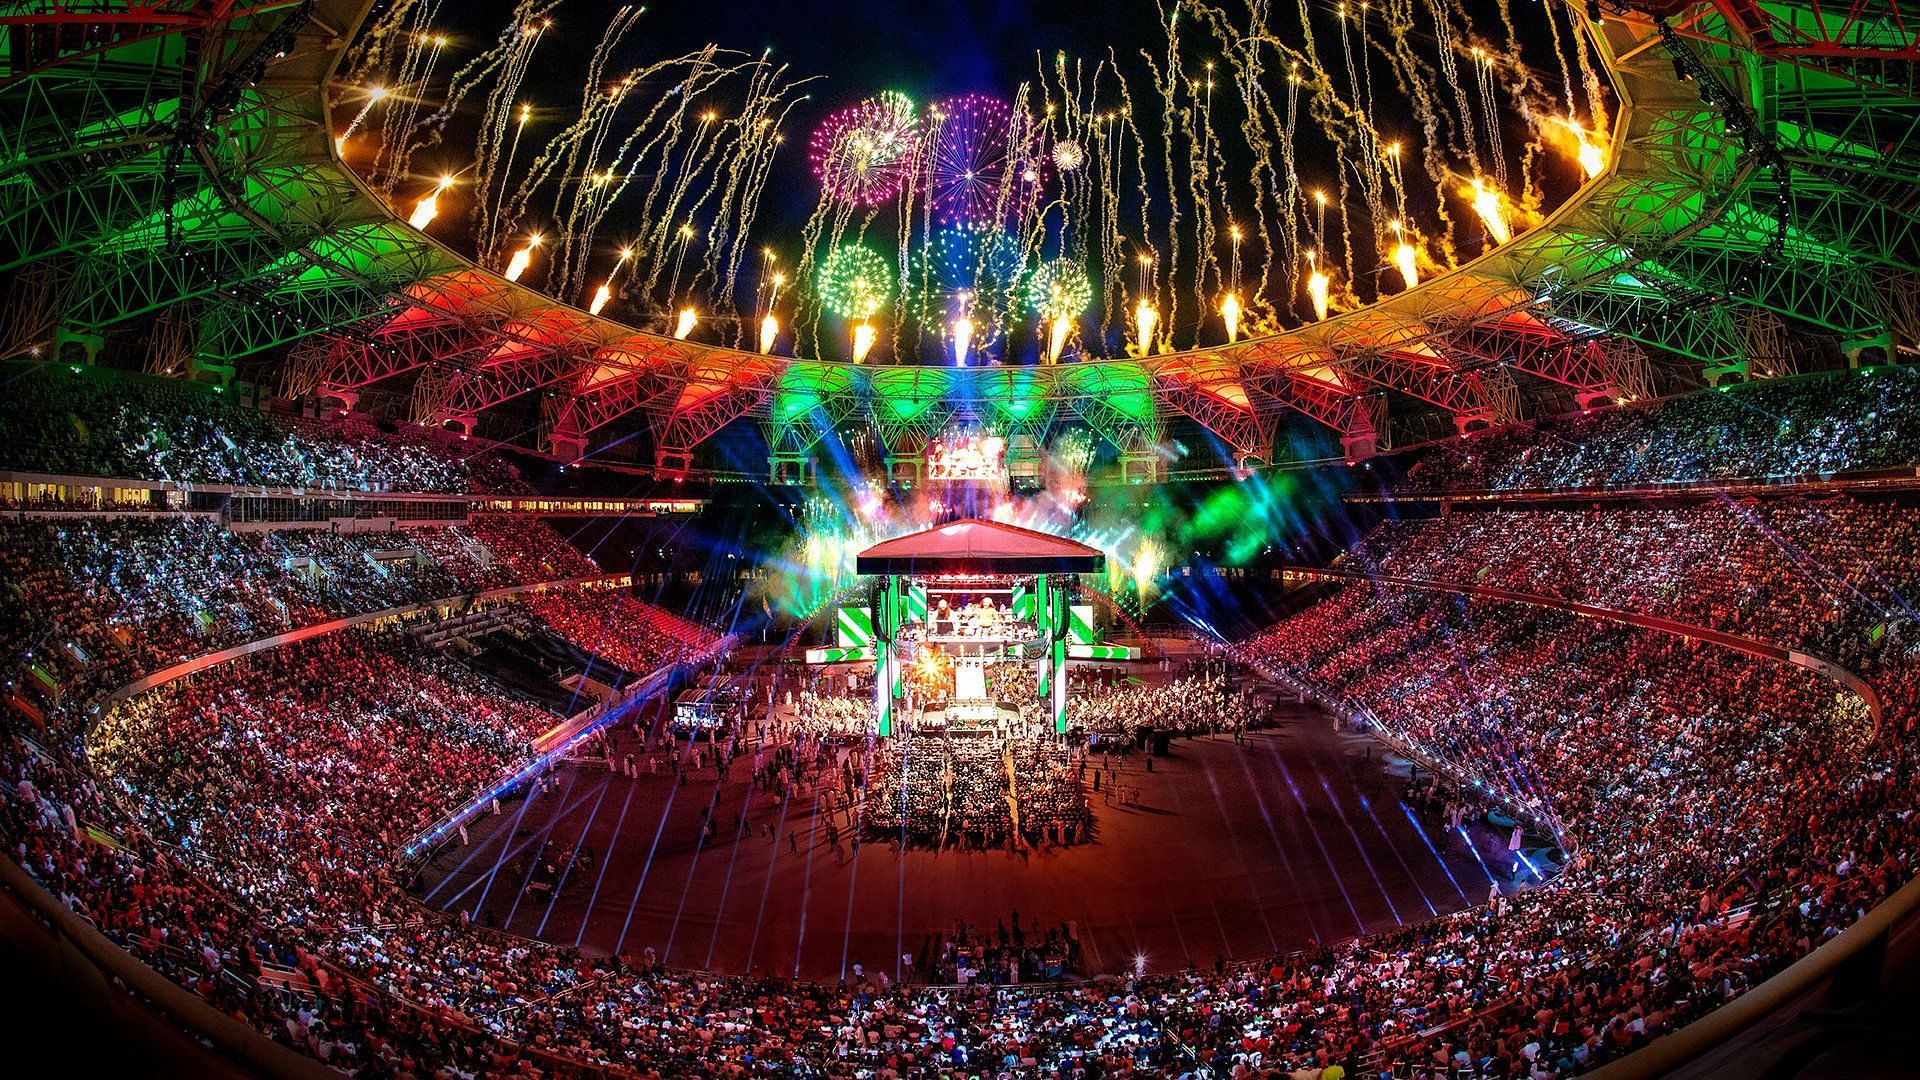 The WWE Universe packs stadium in Jeddah, Saudi Arabia